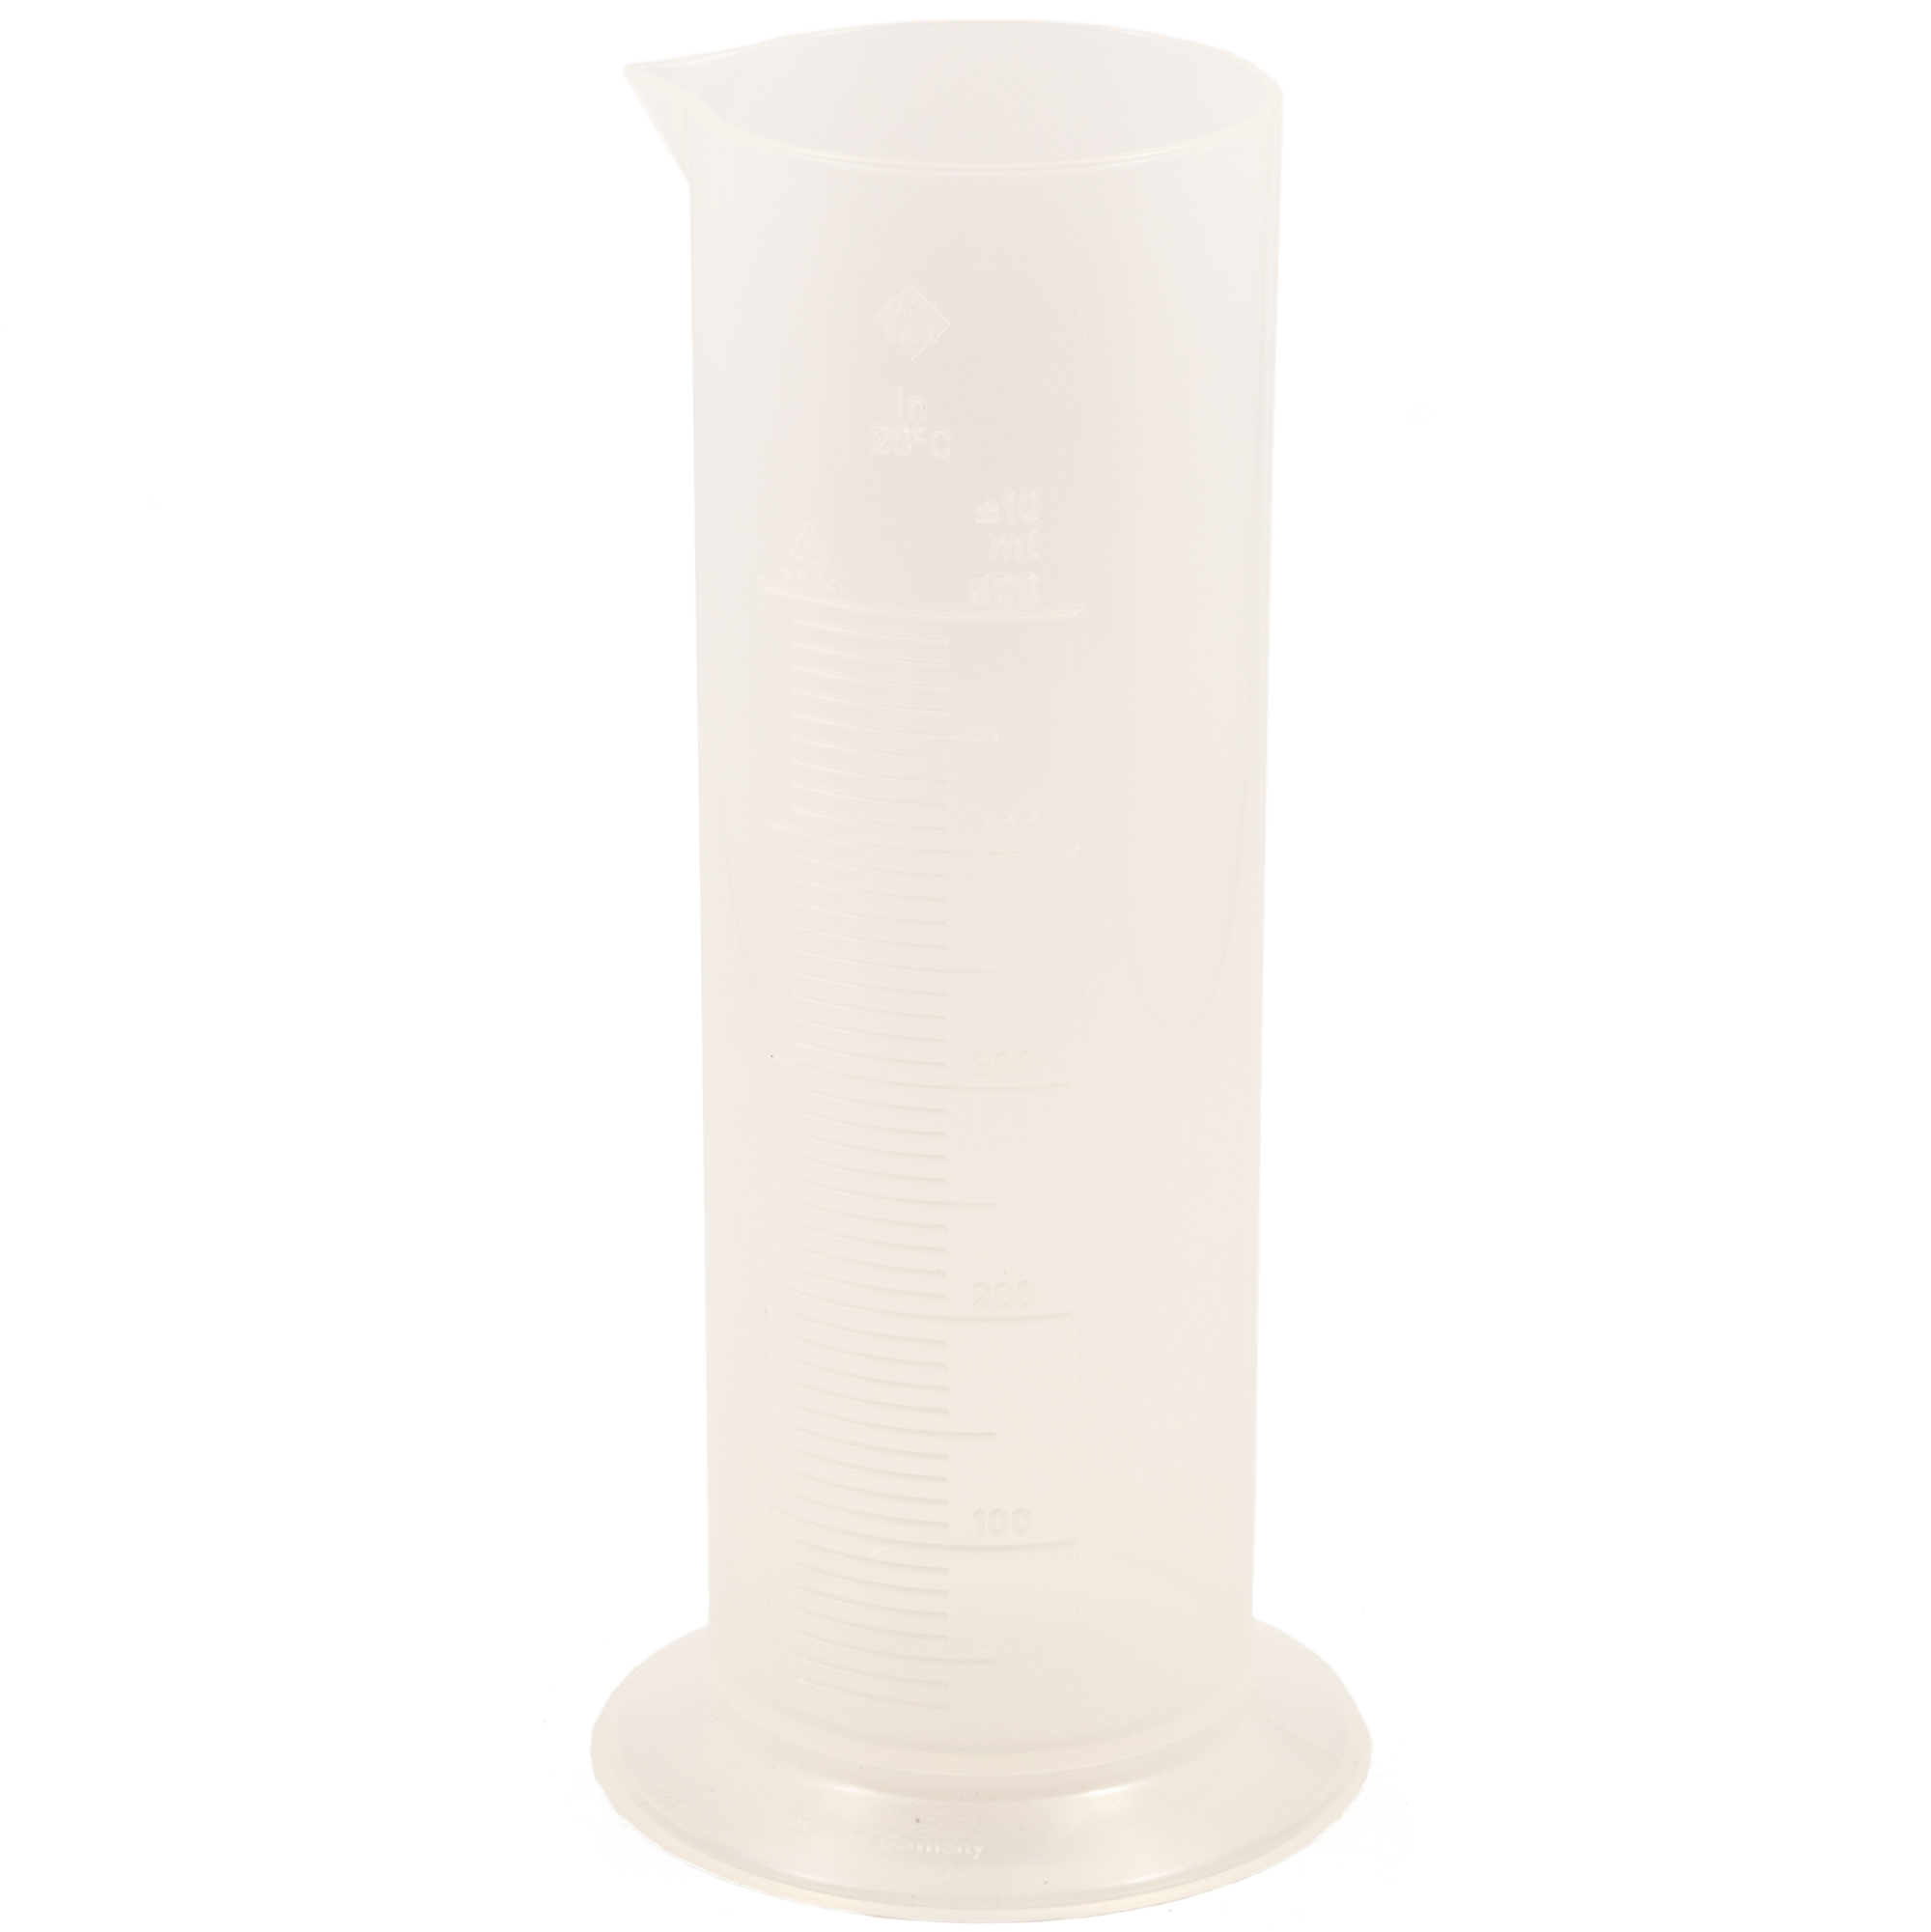 ABML 10766995 Measuring cylinder plastic (pp) low model 10ml